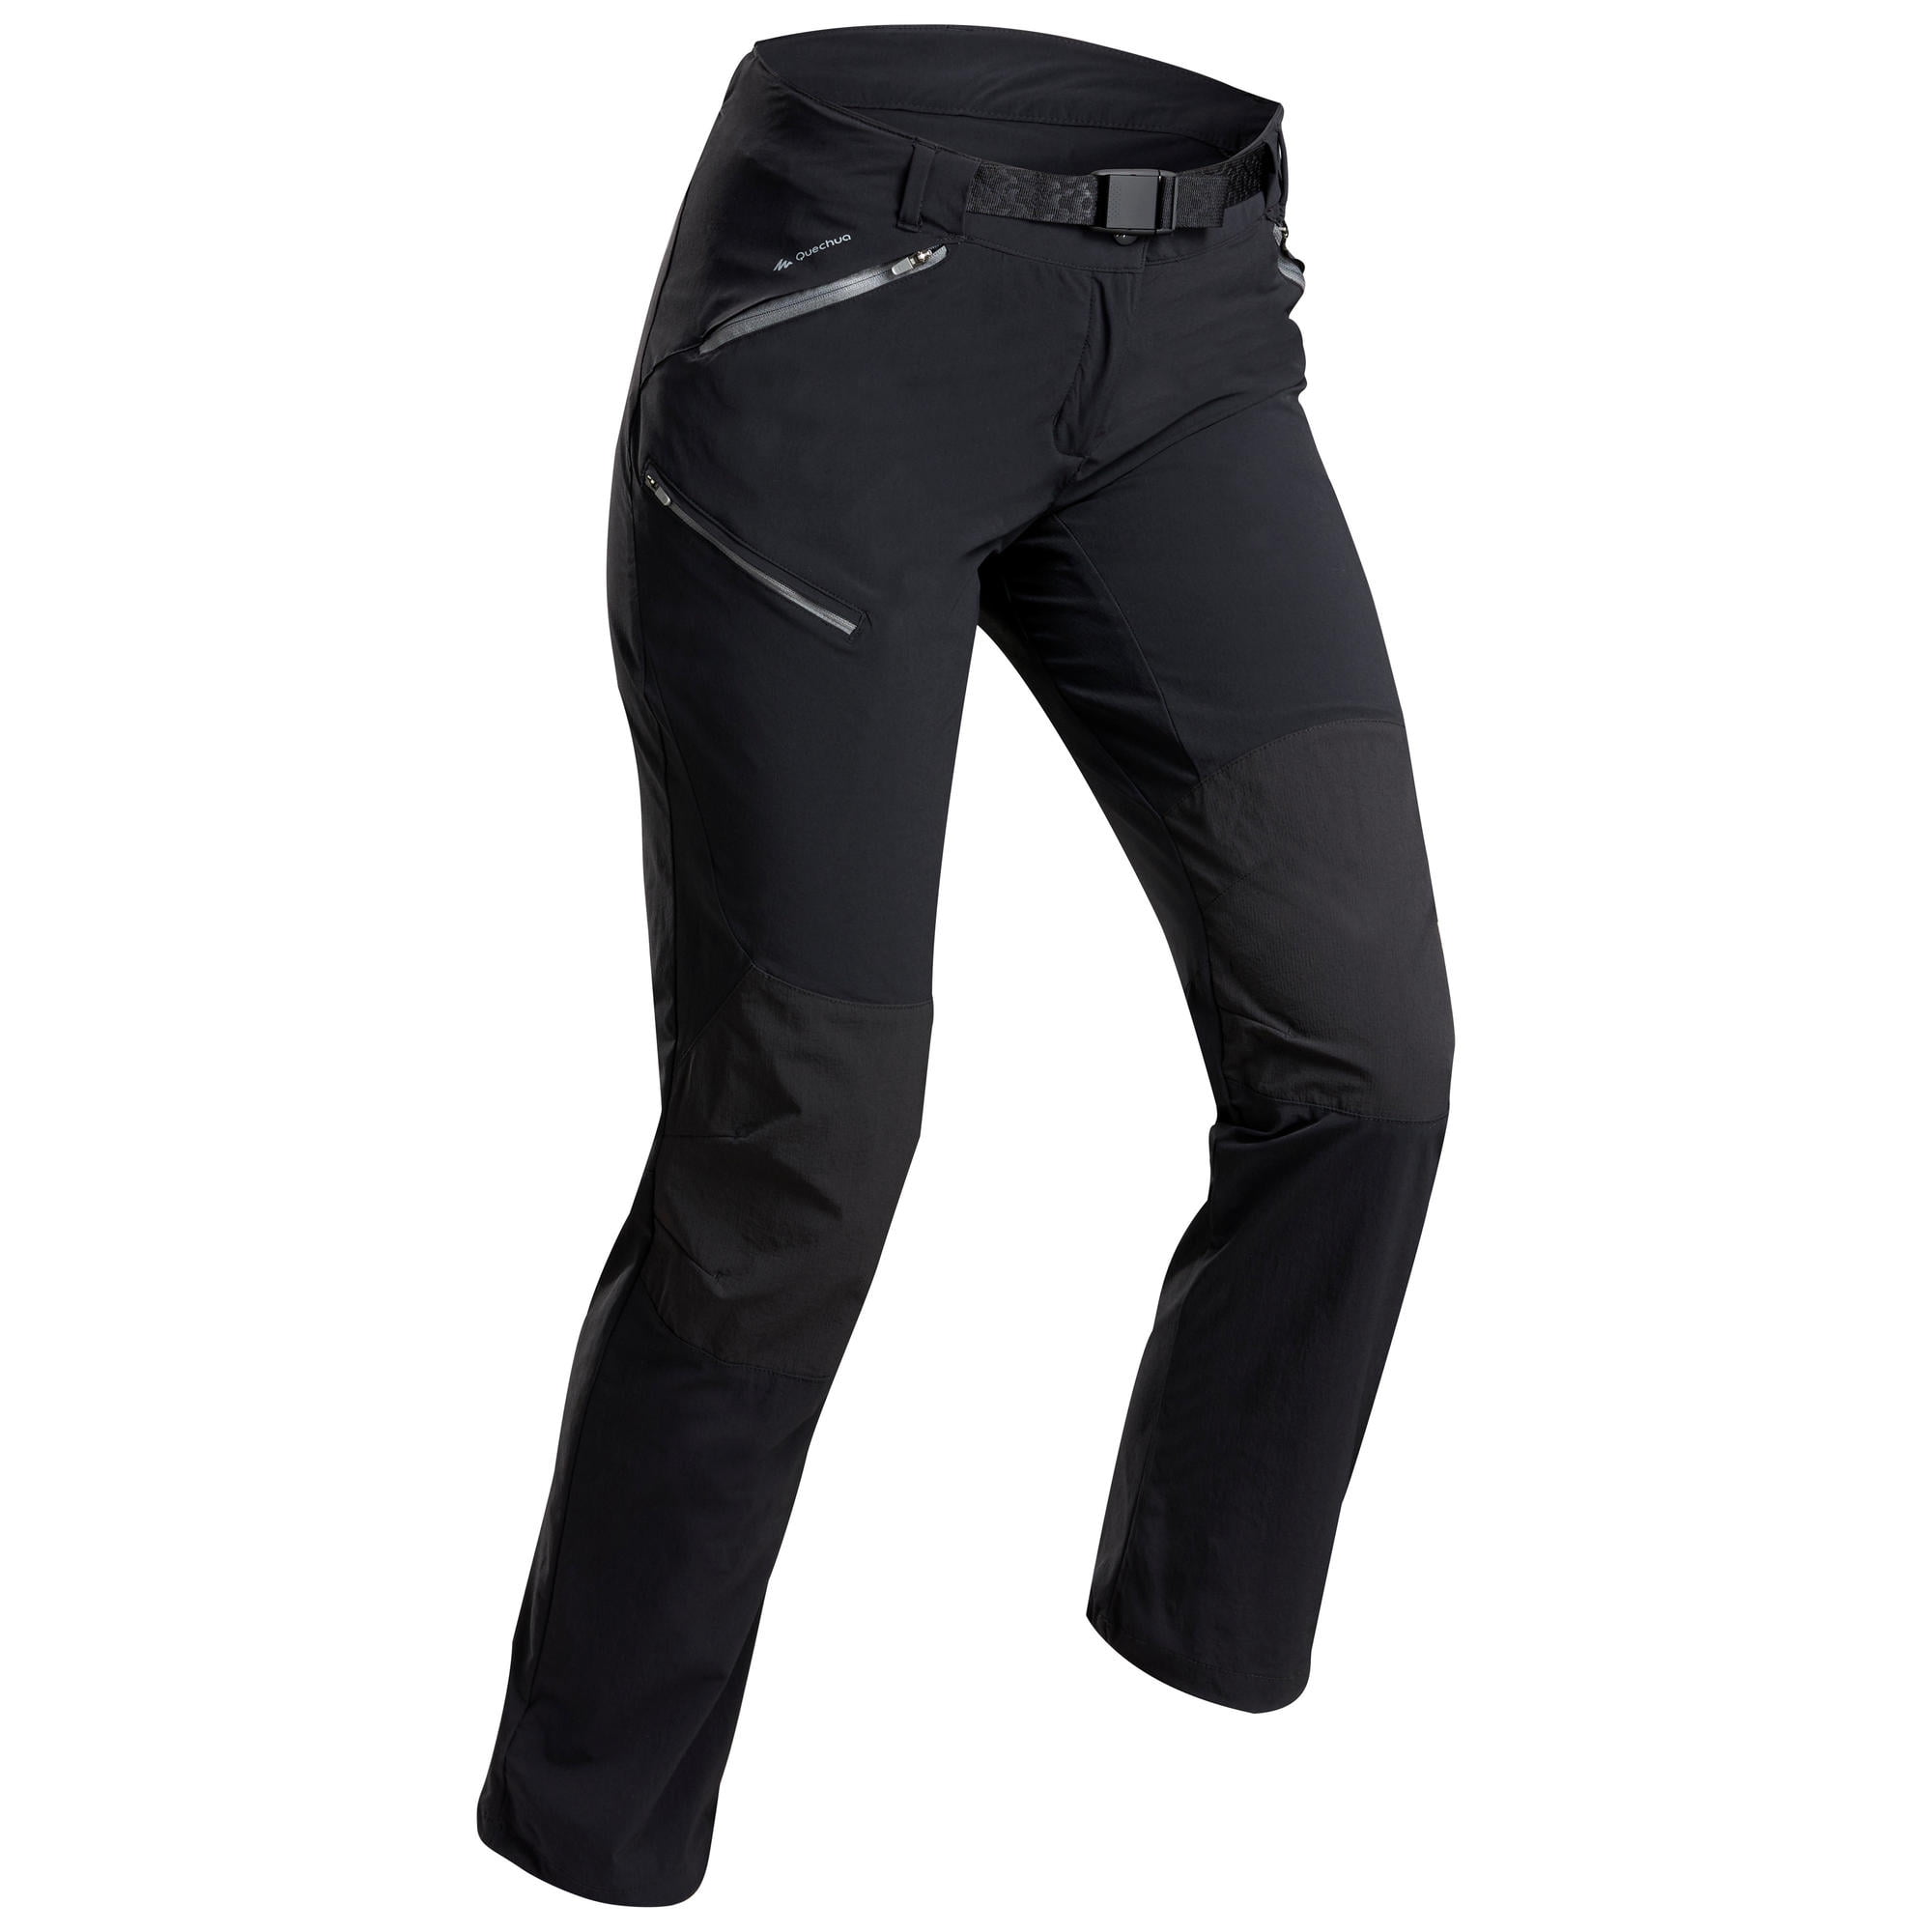 CAYL 6 Pocket Hiking Pants in Black | Wallace Mercantile Shop